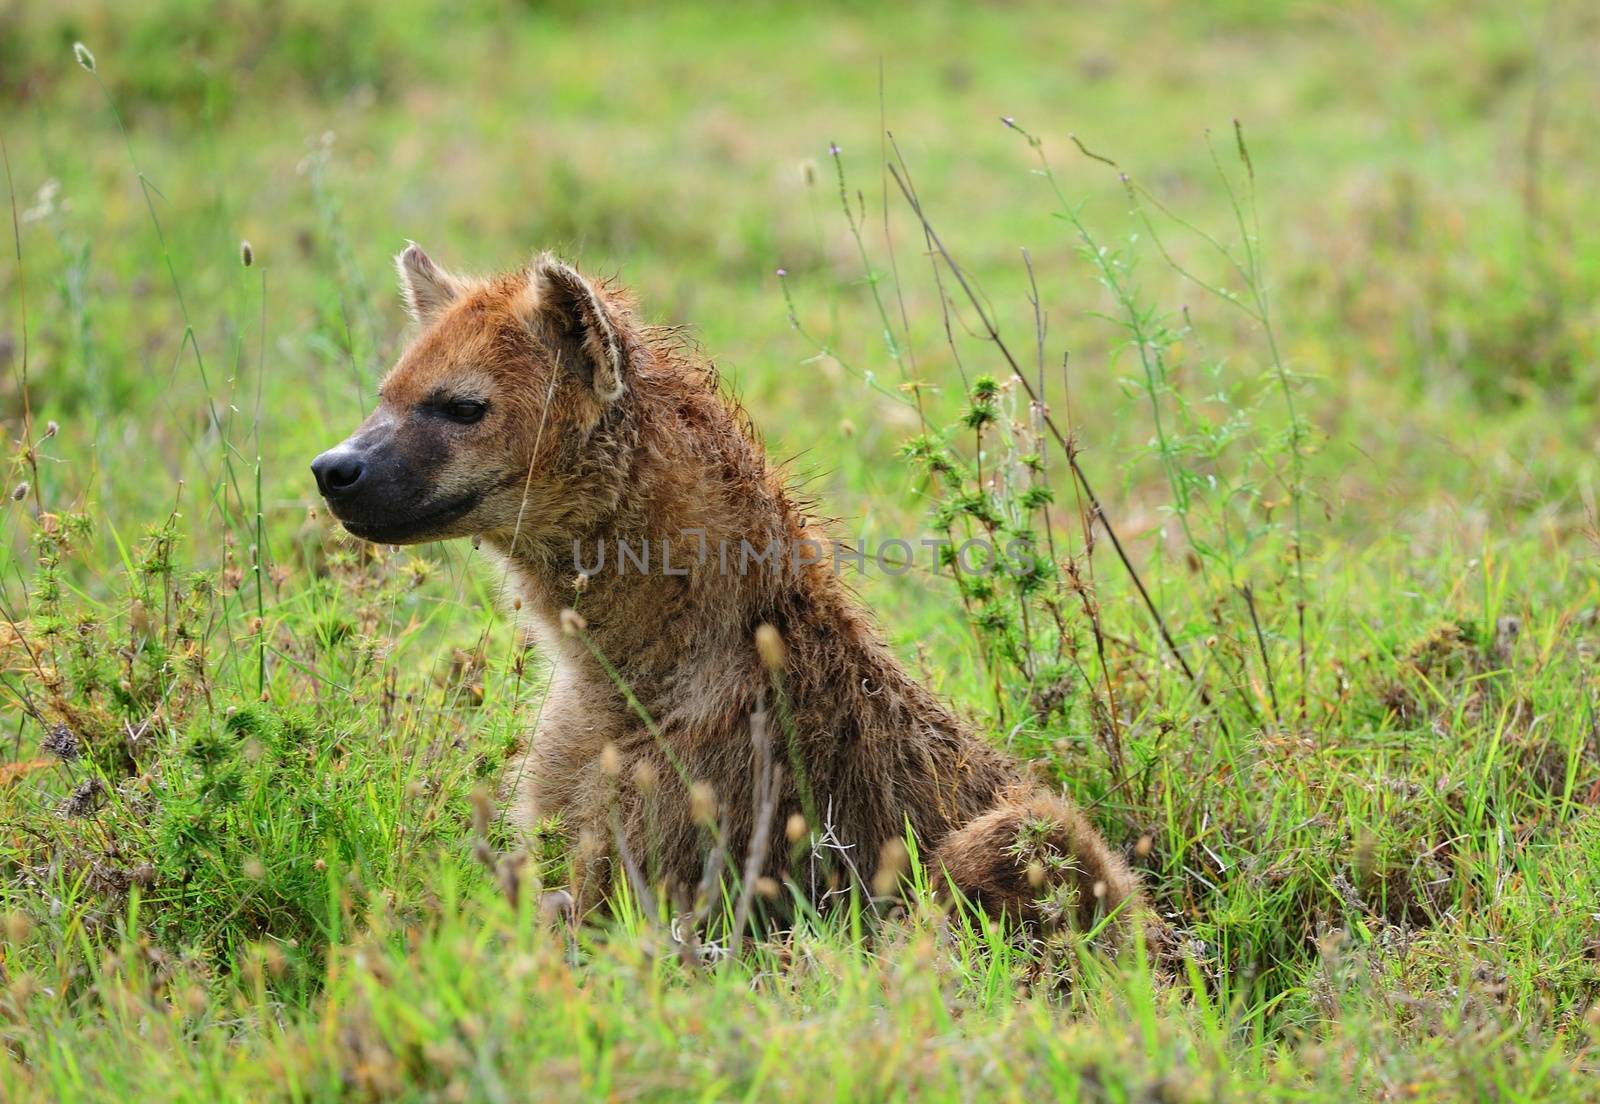 Hyena in national park Tanzania by moizhusein